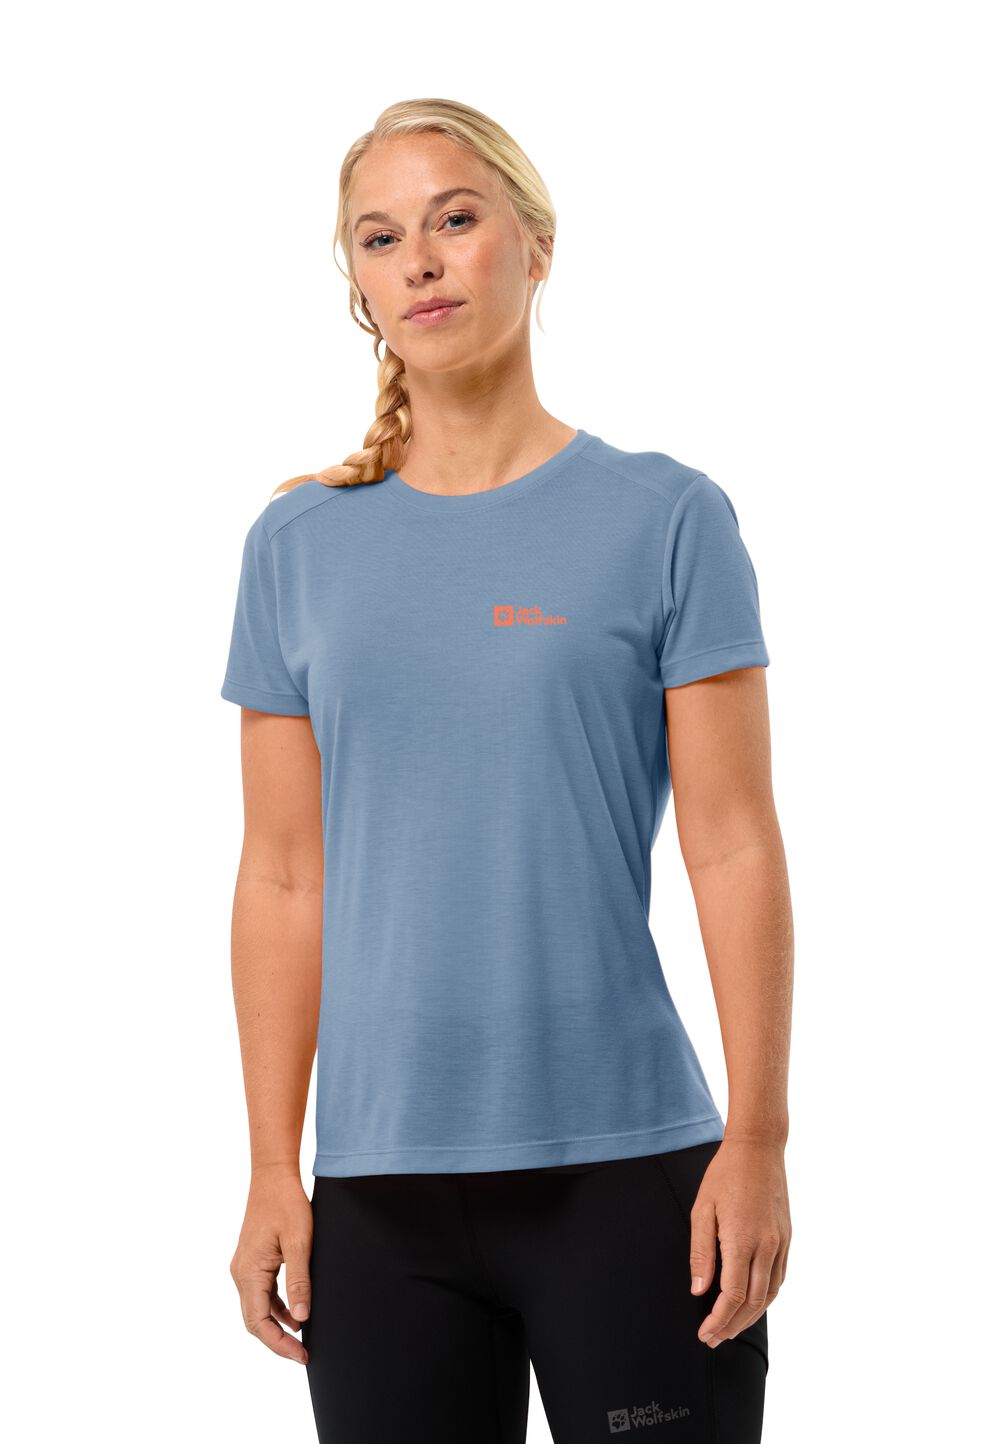 Jack Wolfskin Vonnan S S T-Shirt Women Functioneel shirt Dames XXL elemental blue elemental blue